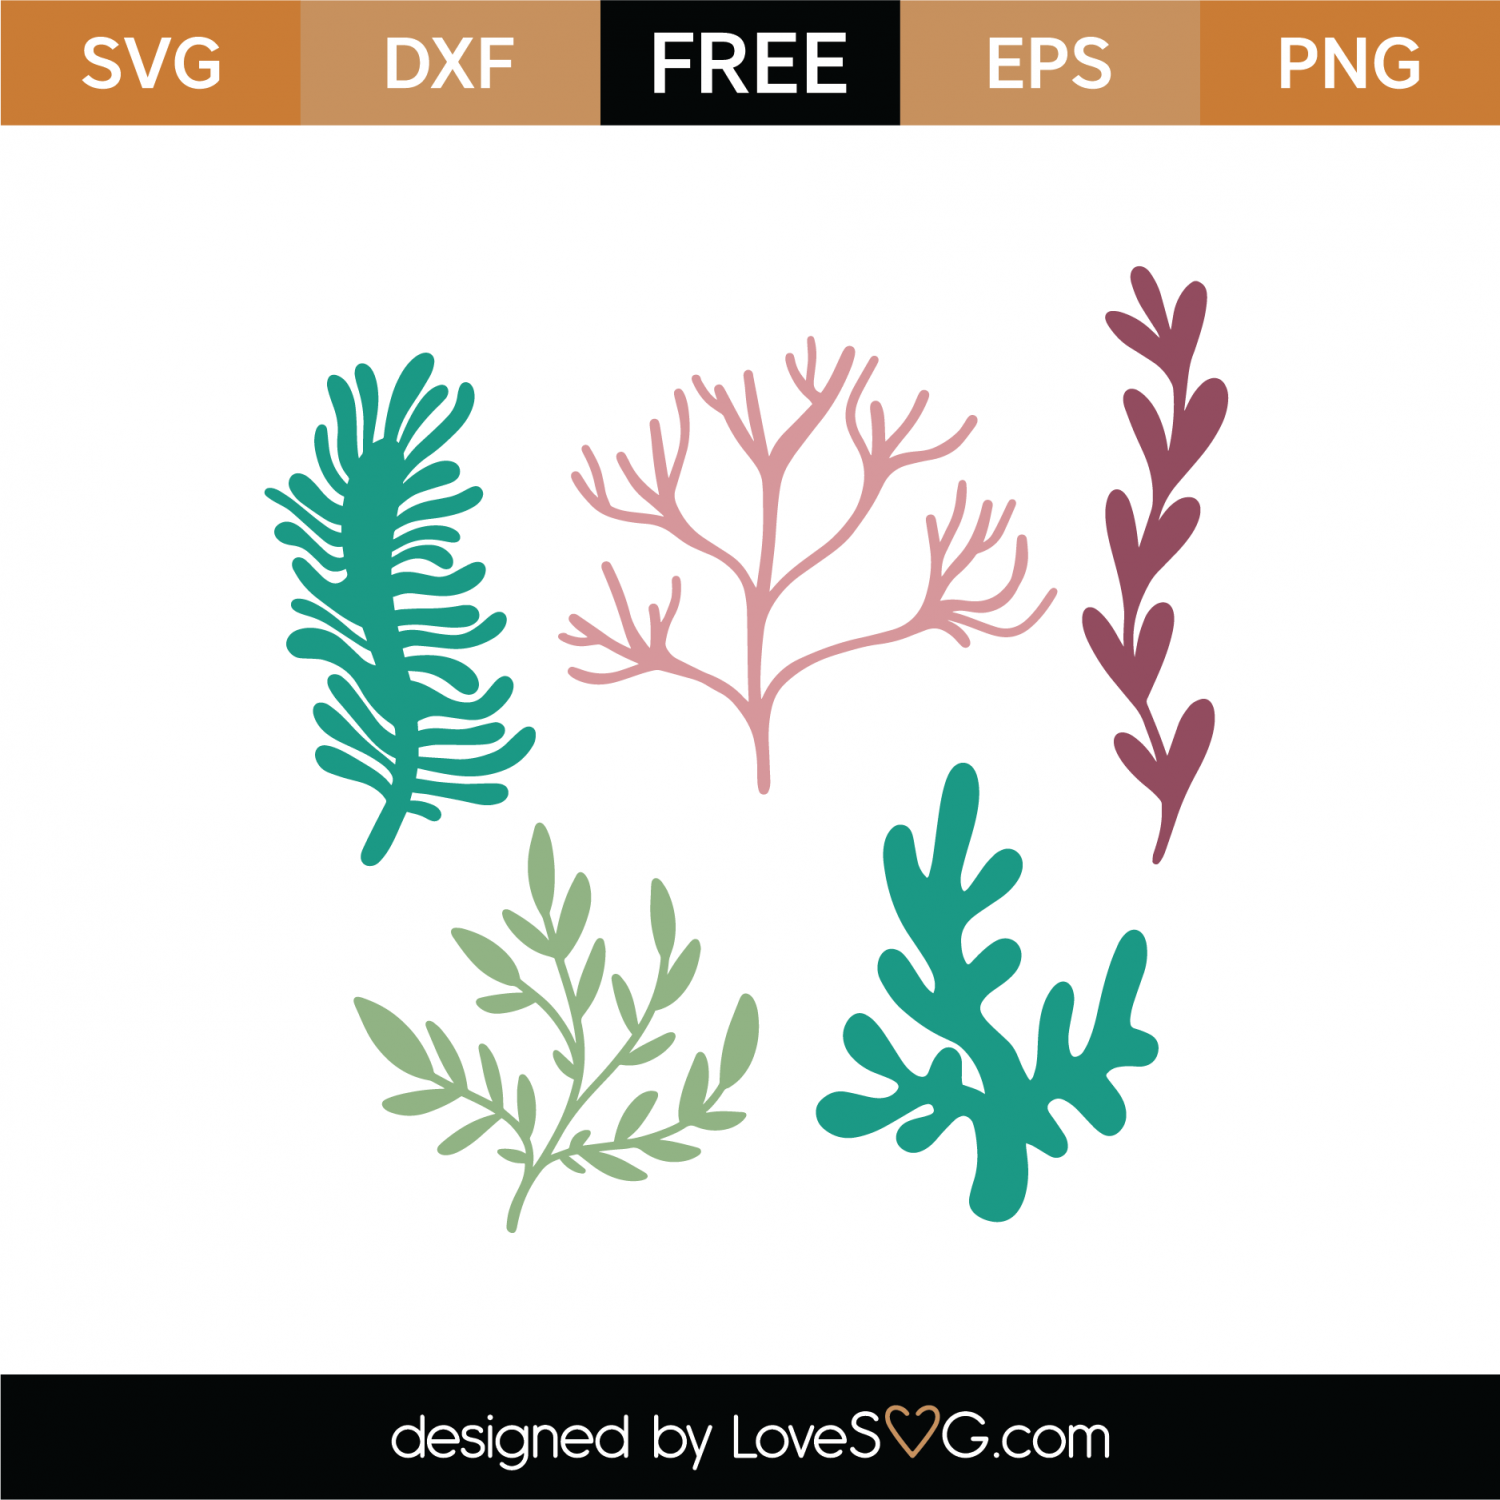 Download Free Under The Sea Plants SVG Cut File | Lovesvg.com